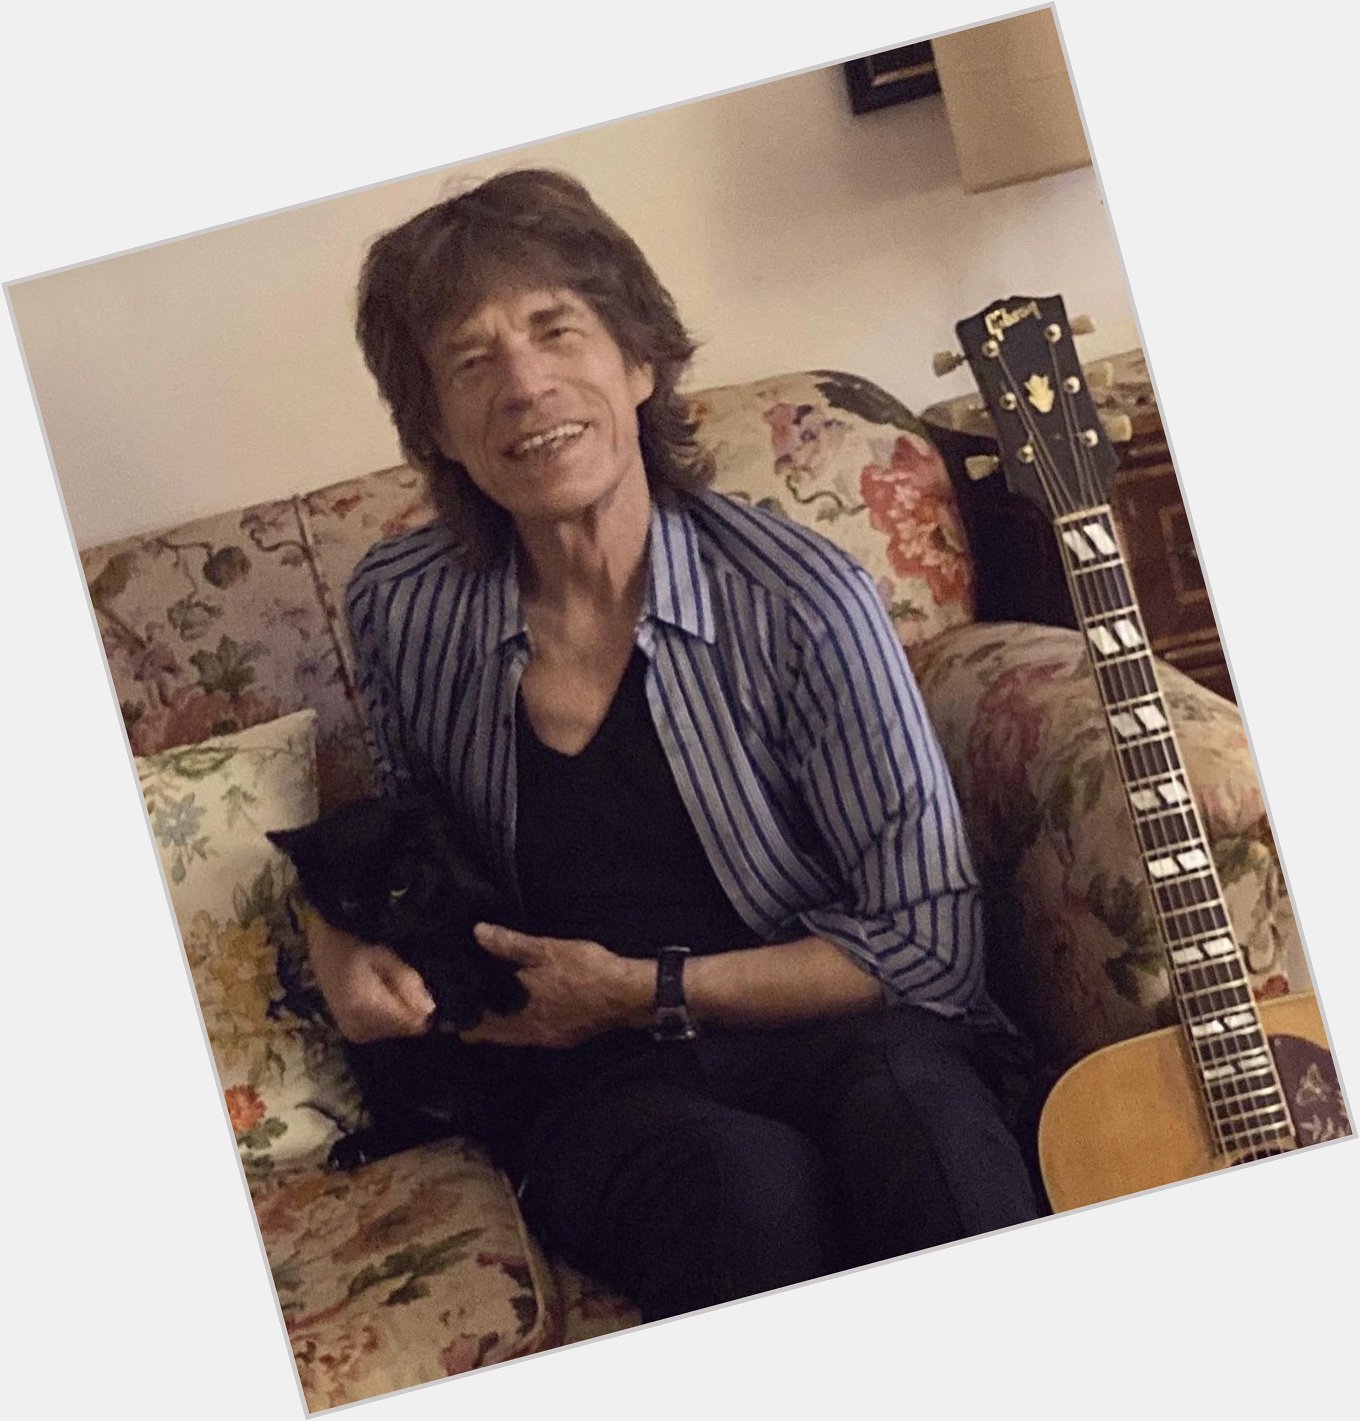 Happy 78 birthday to Mick Jagger! 